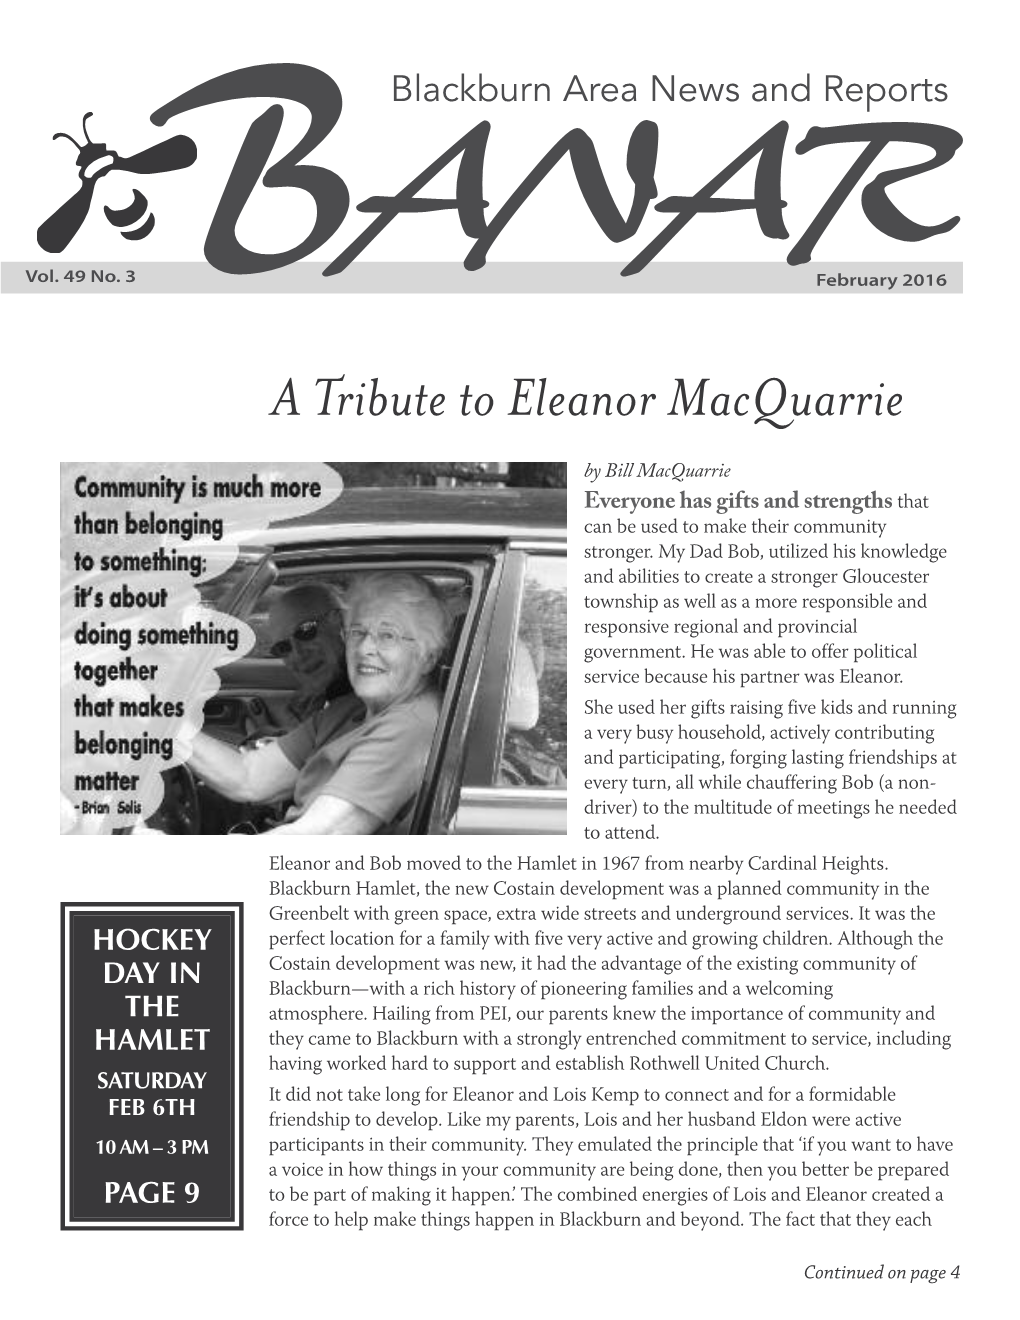 A Tribute to Eleanor Macquarrie